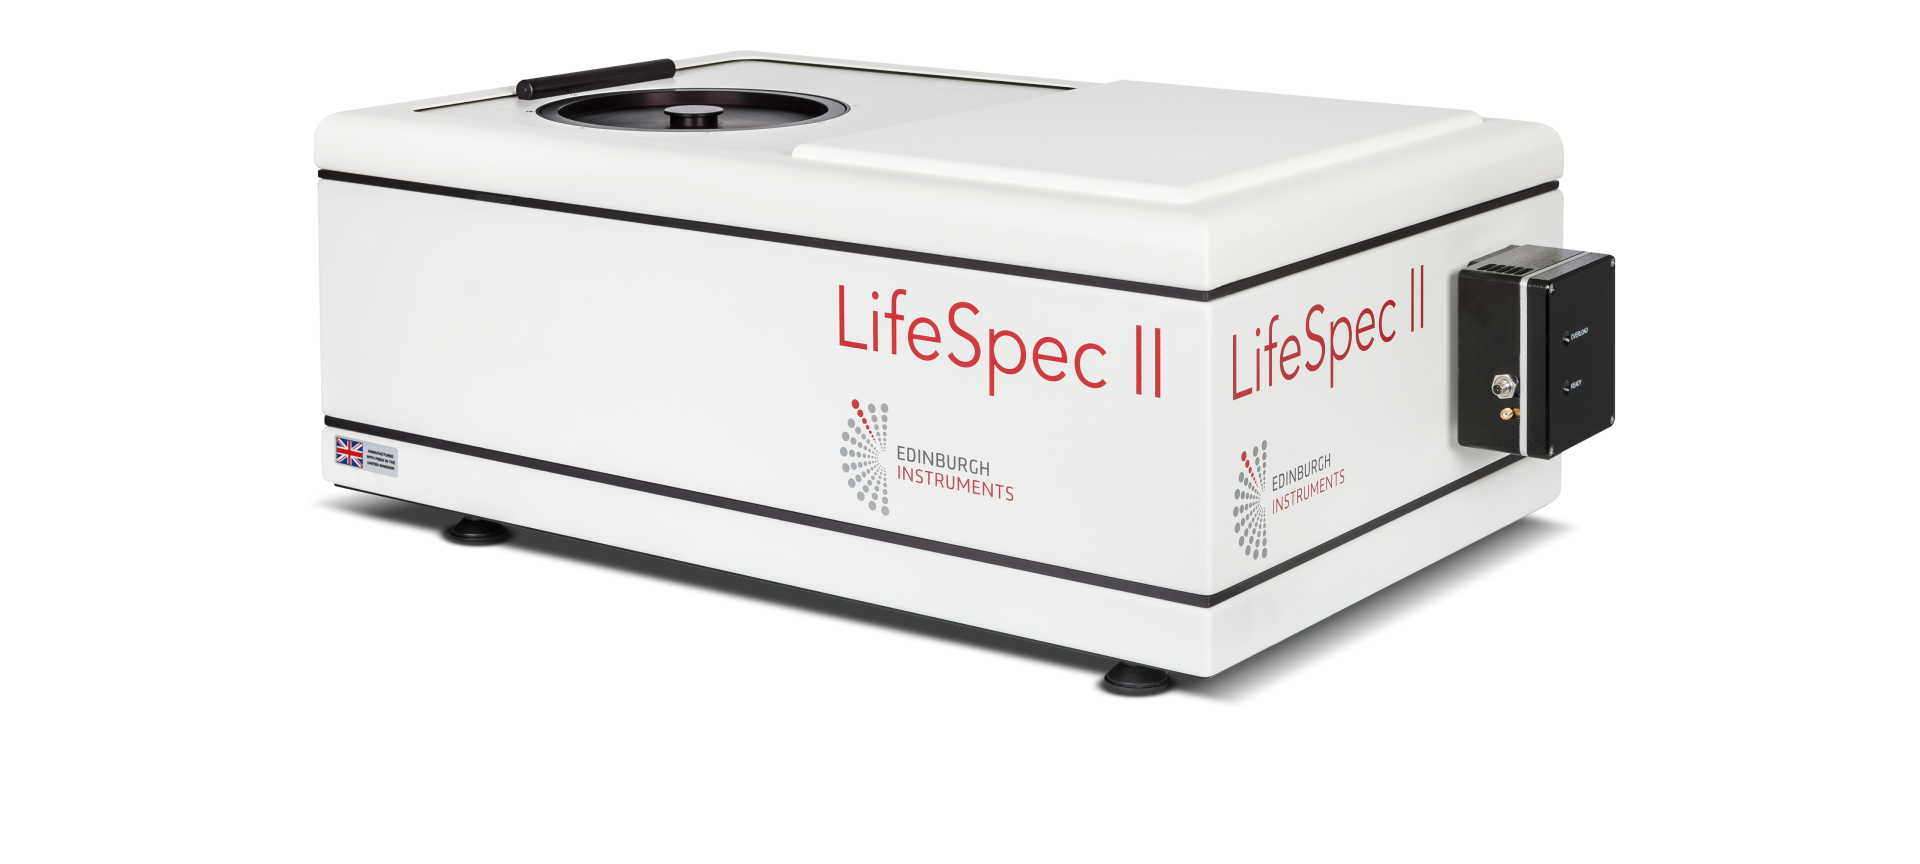 LifeSpec II Upgrades